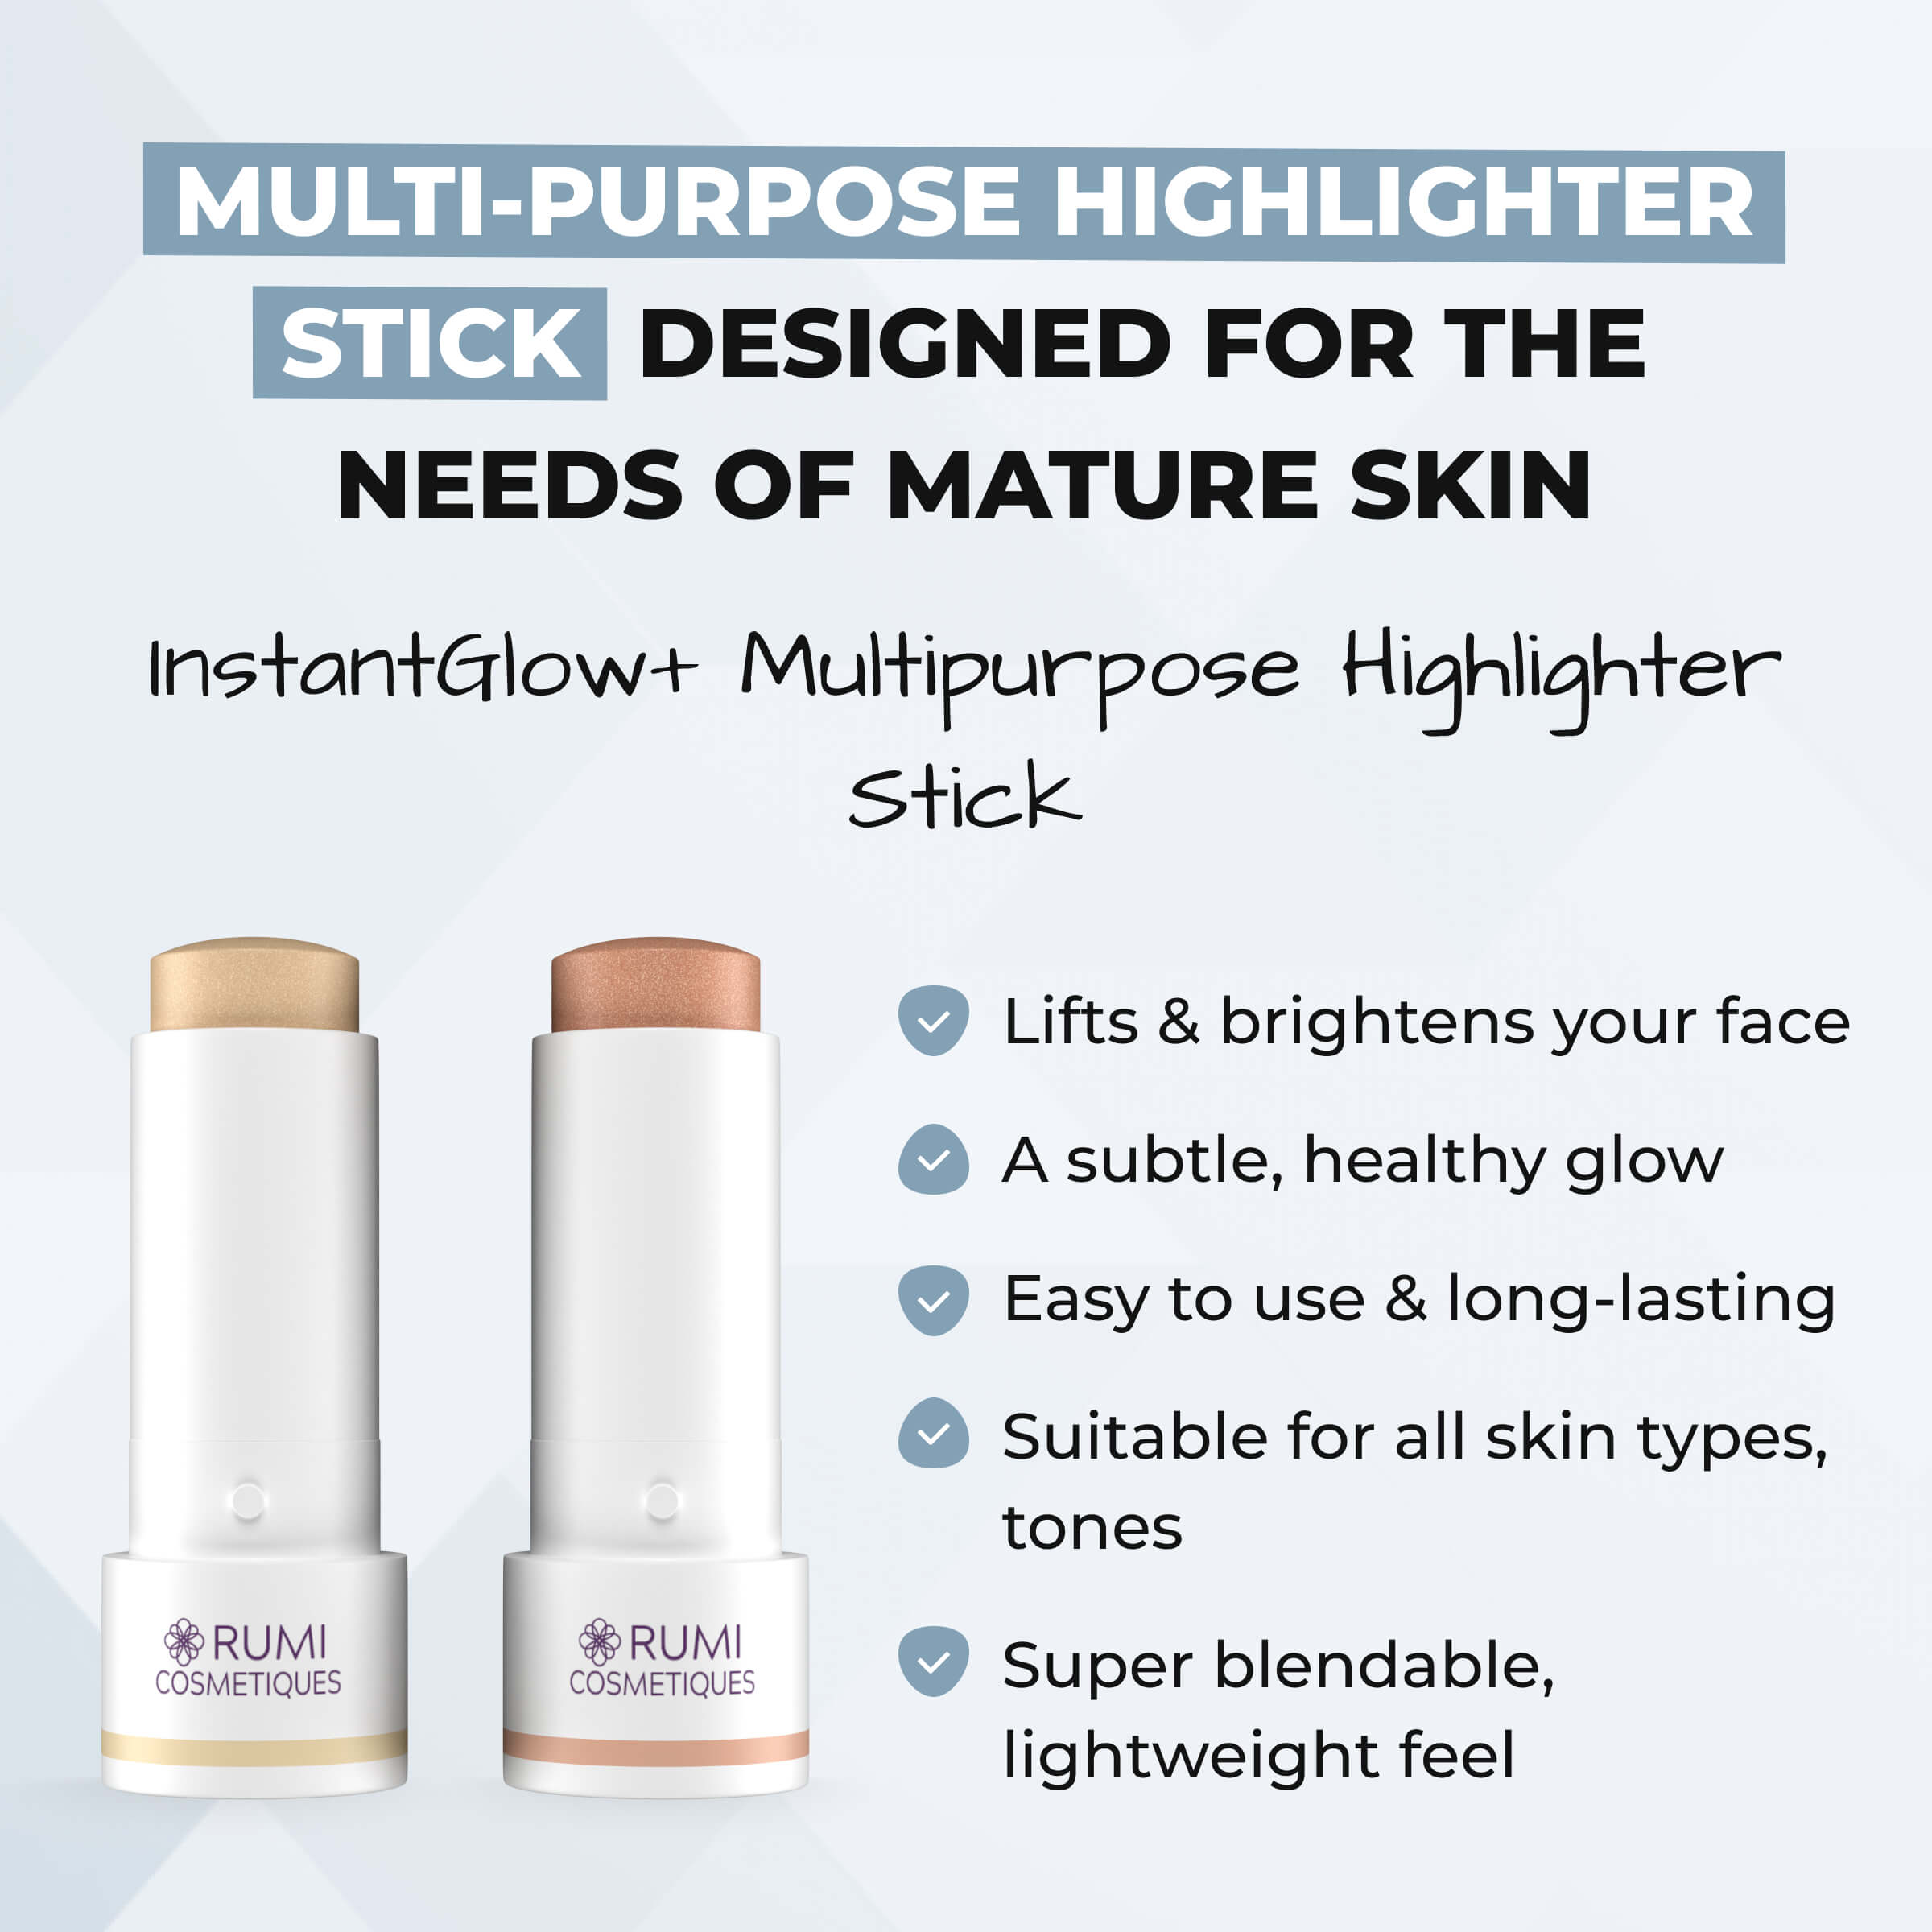 InstantGlow+ Multipurpose Highlighter Stick